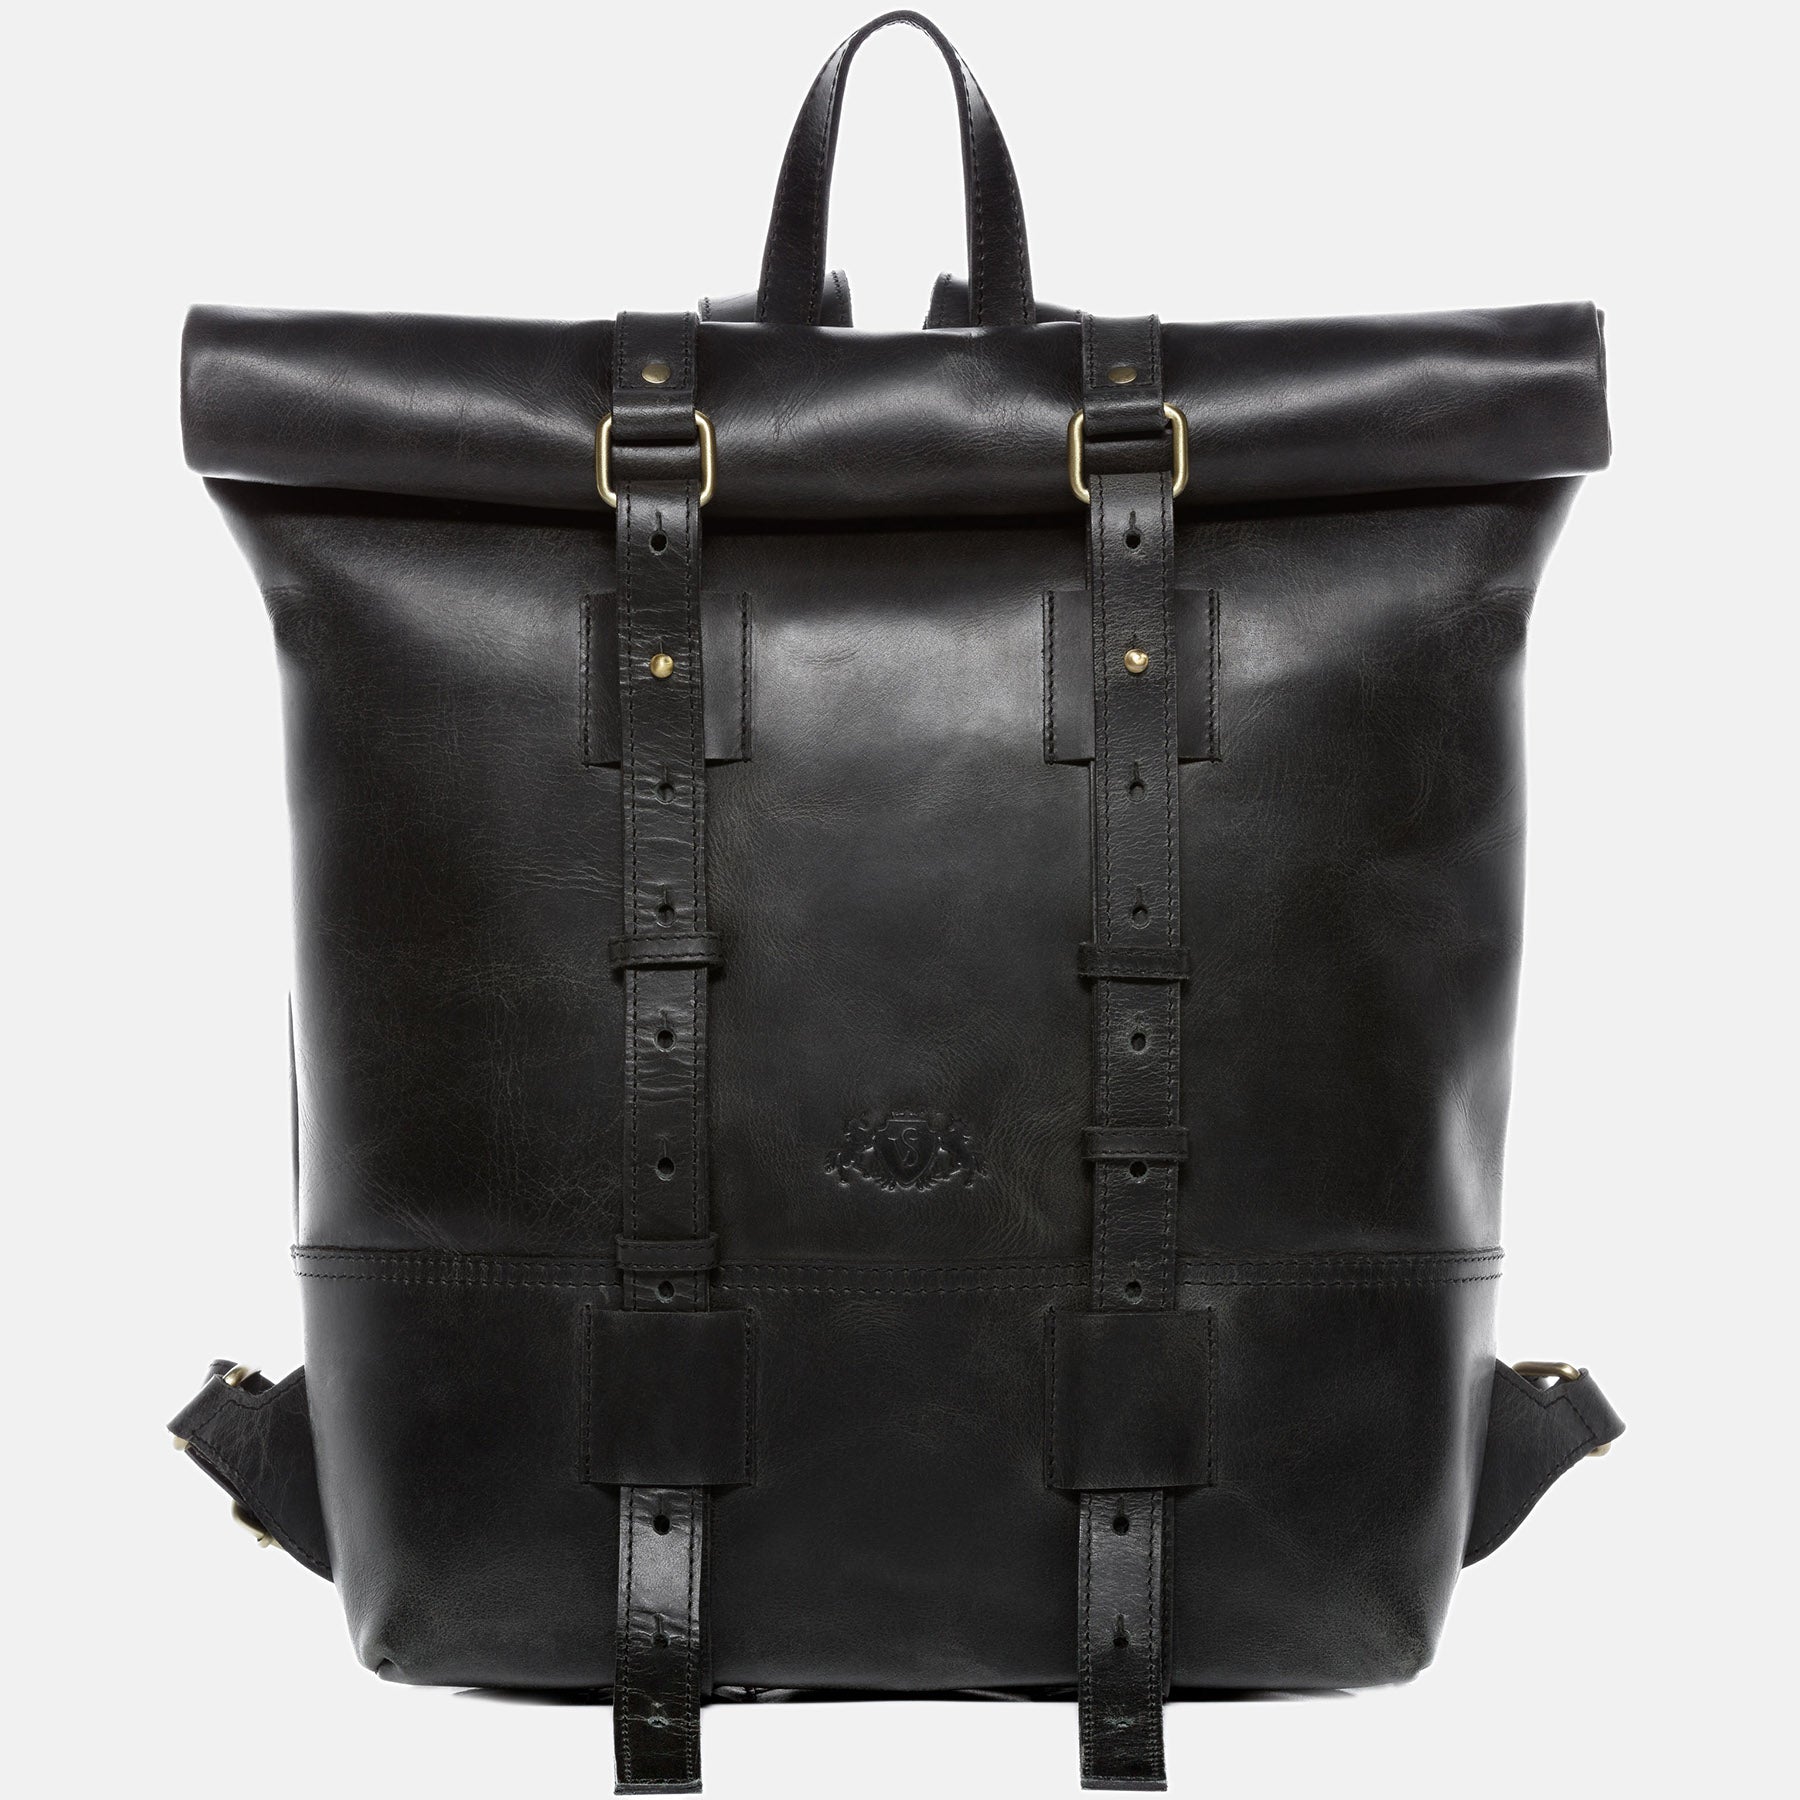 Rolltop backpack CHAZ buffalo leather vintage black